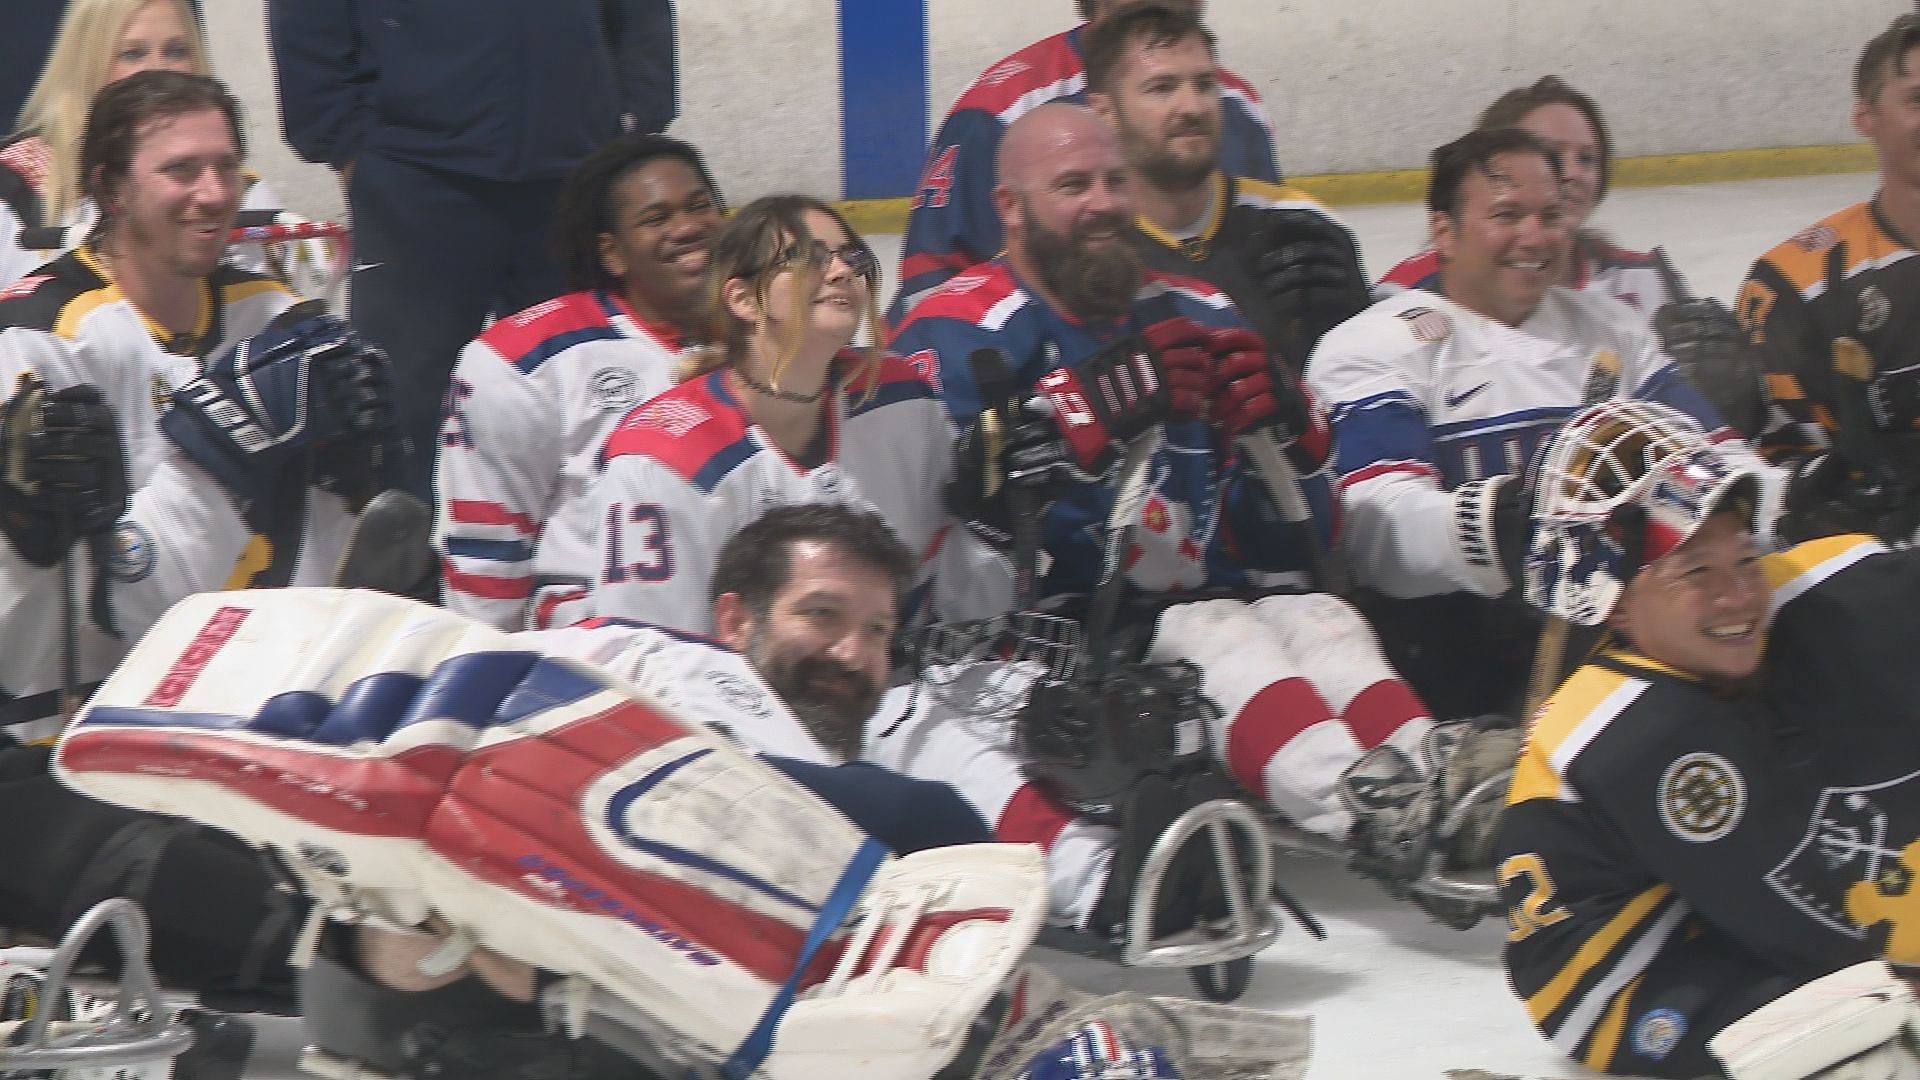 Sled hockey provides camaraderie to medically retired veterans 13newsnow